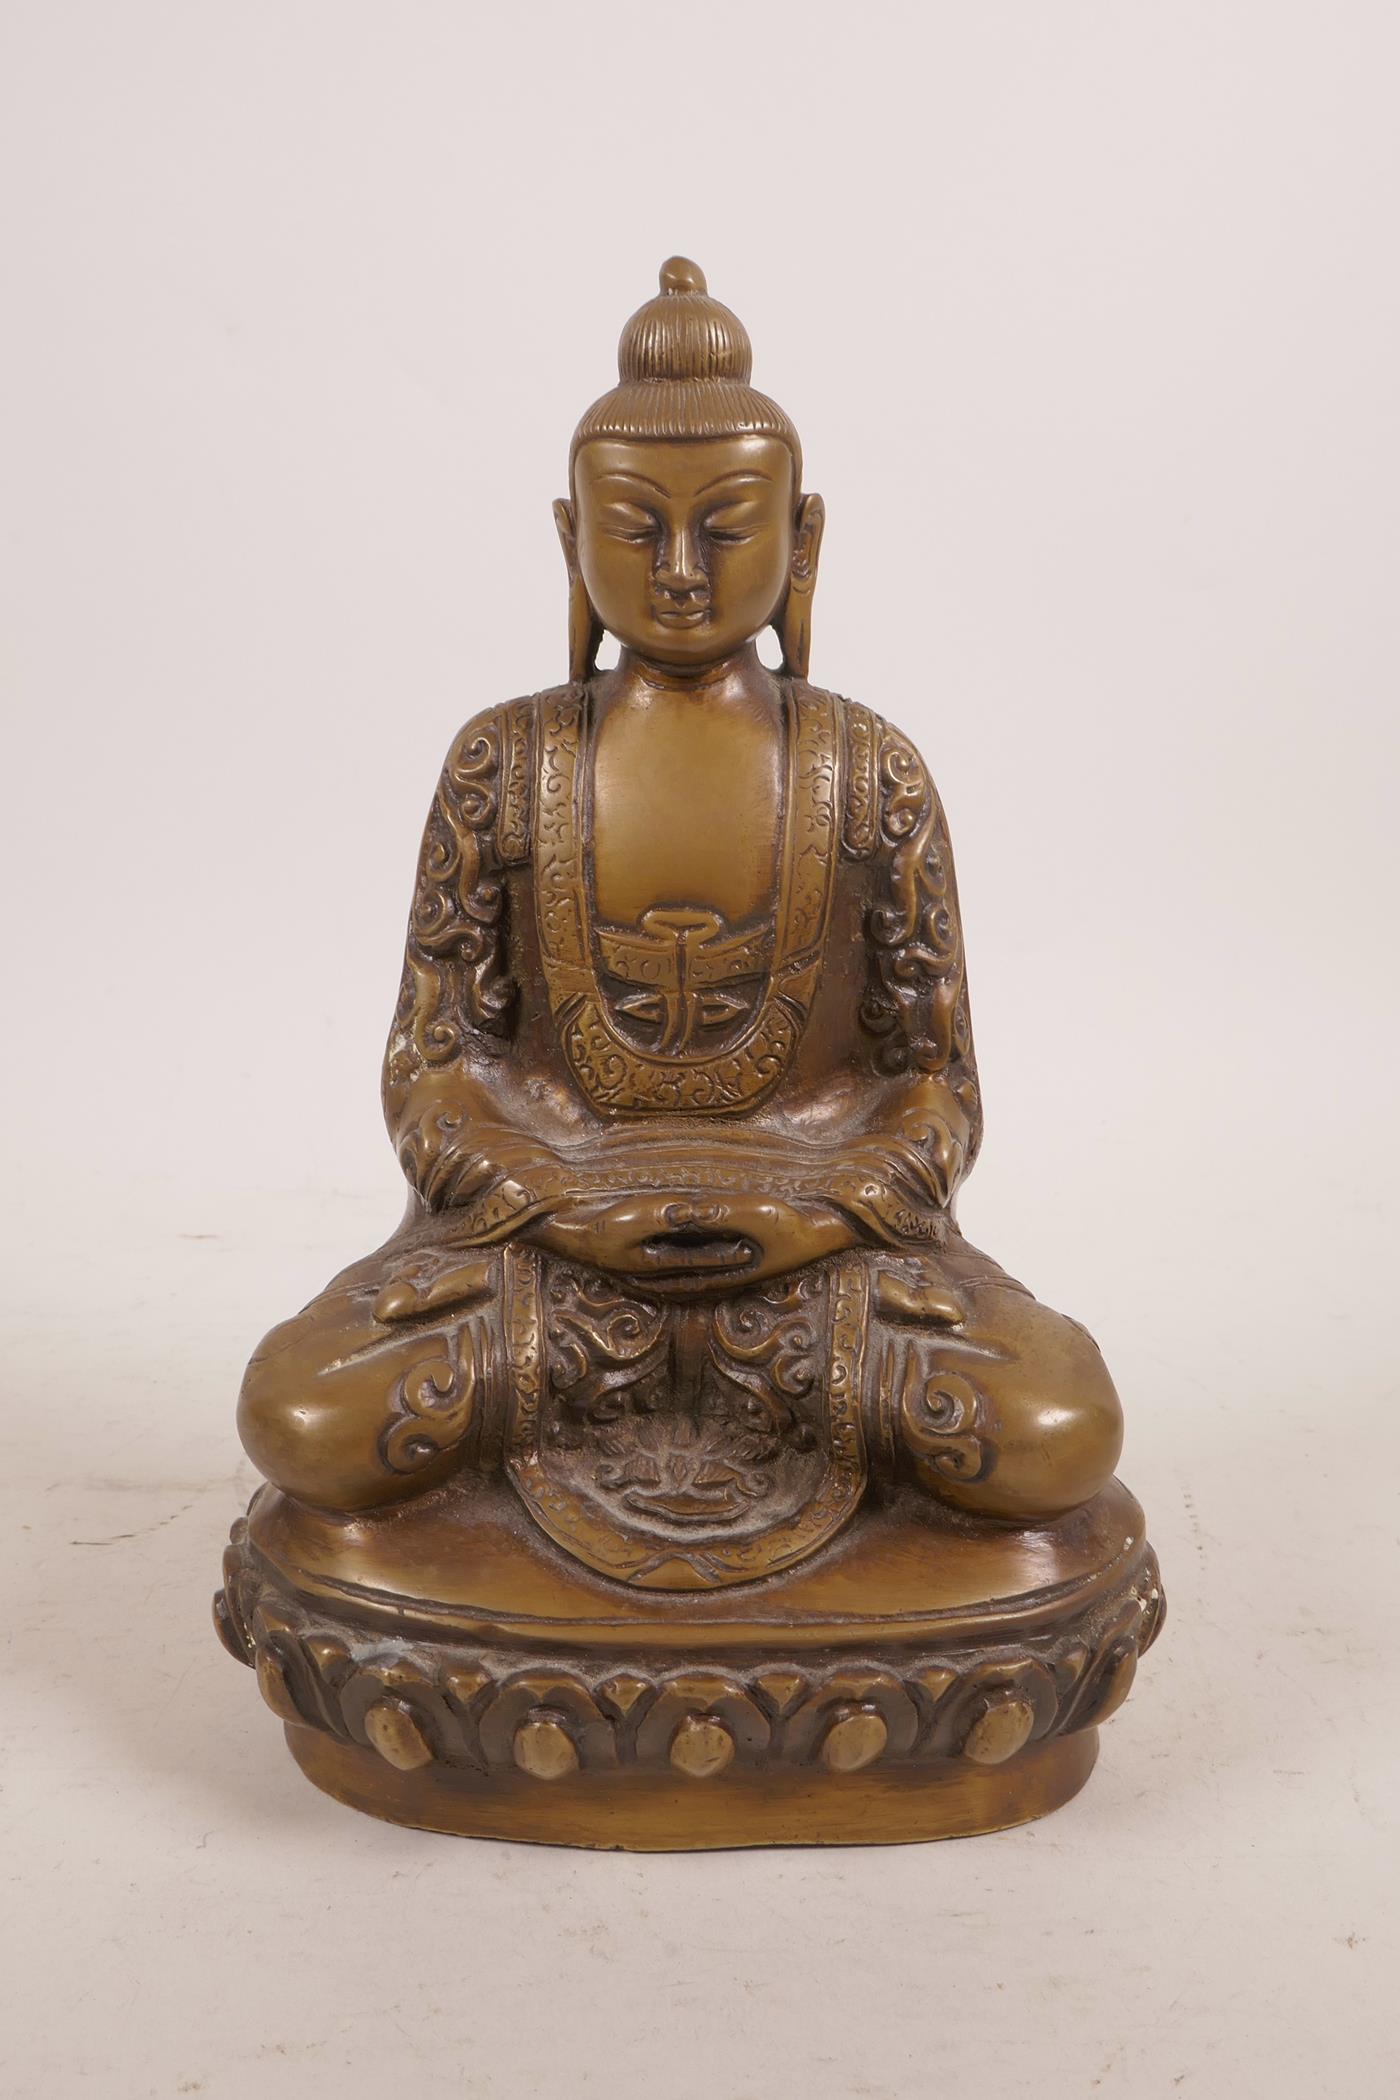 A bronzed metal figure of Buddha, possibly Burmese, 8" high